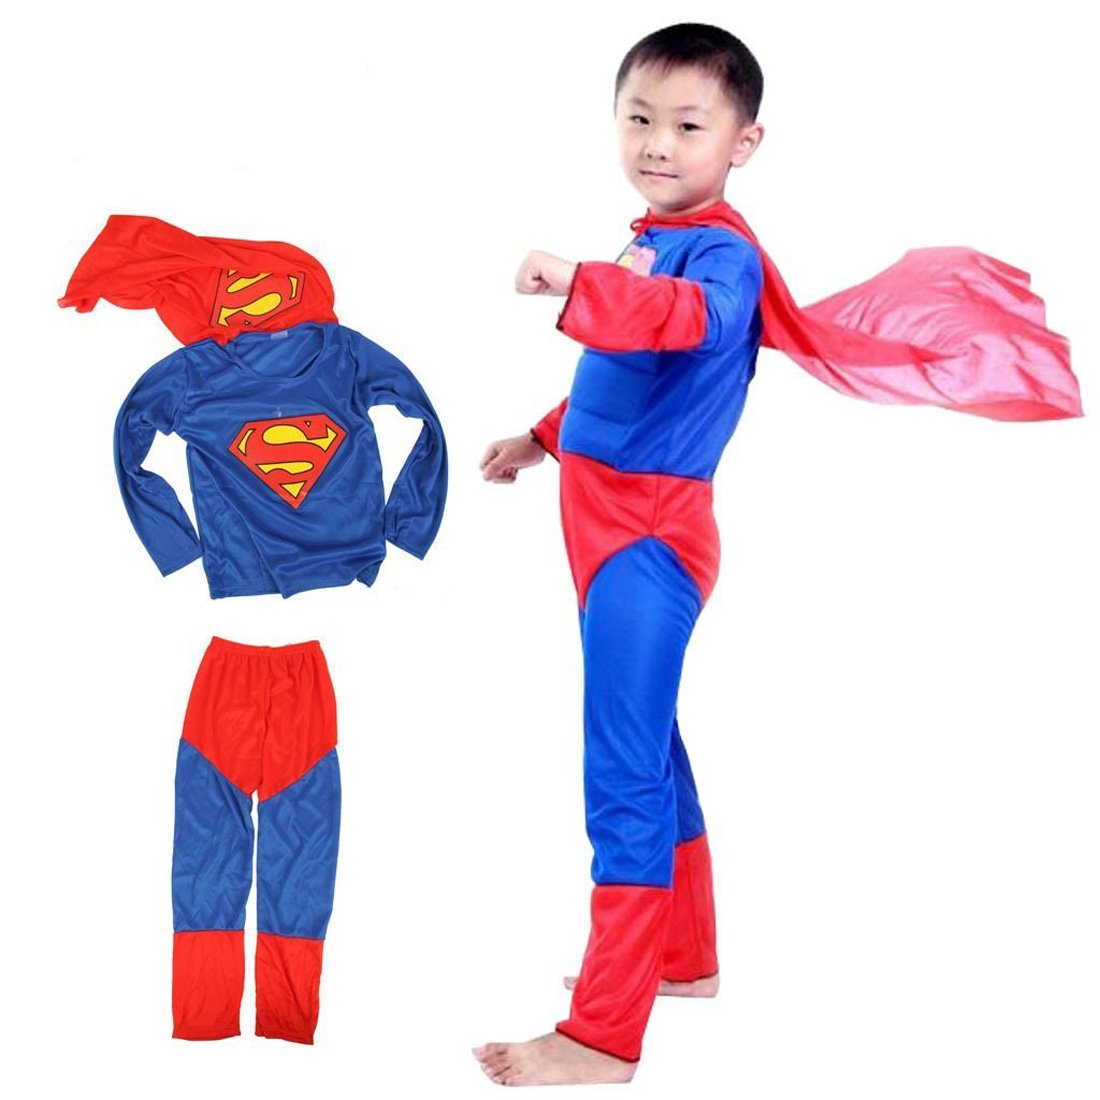 Superman Costume 03